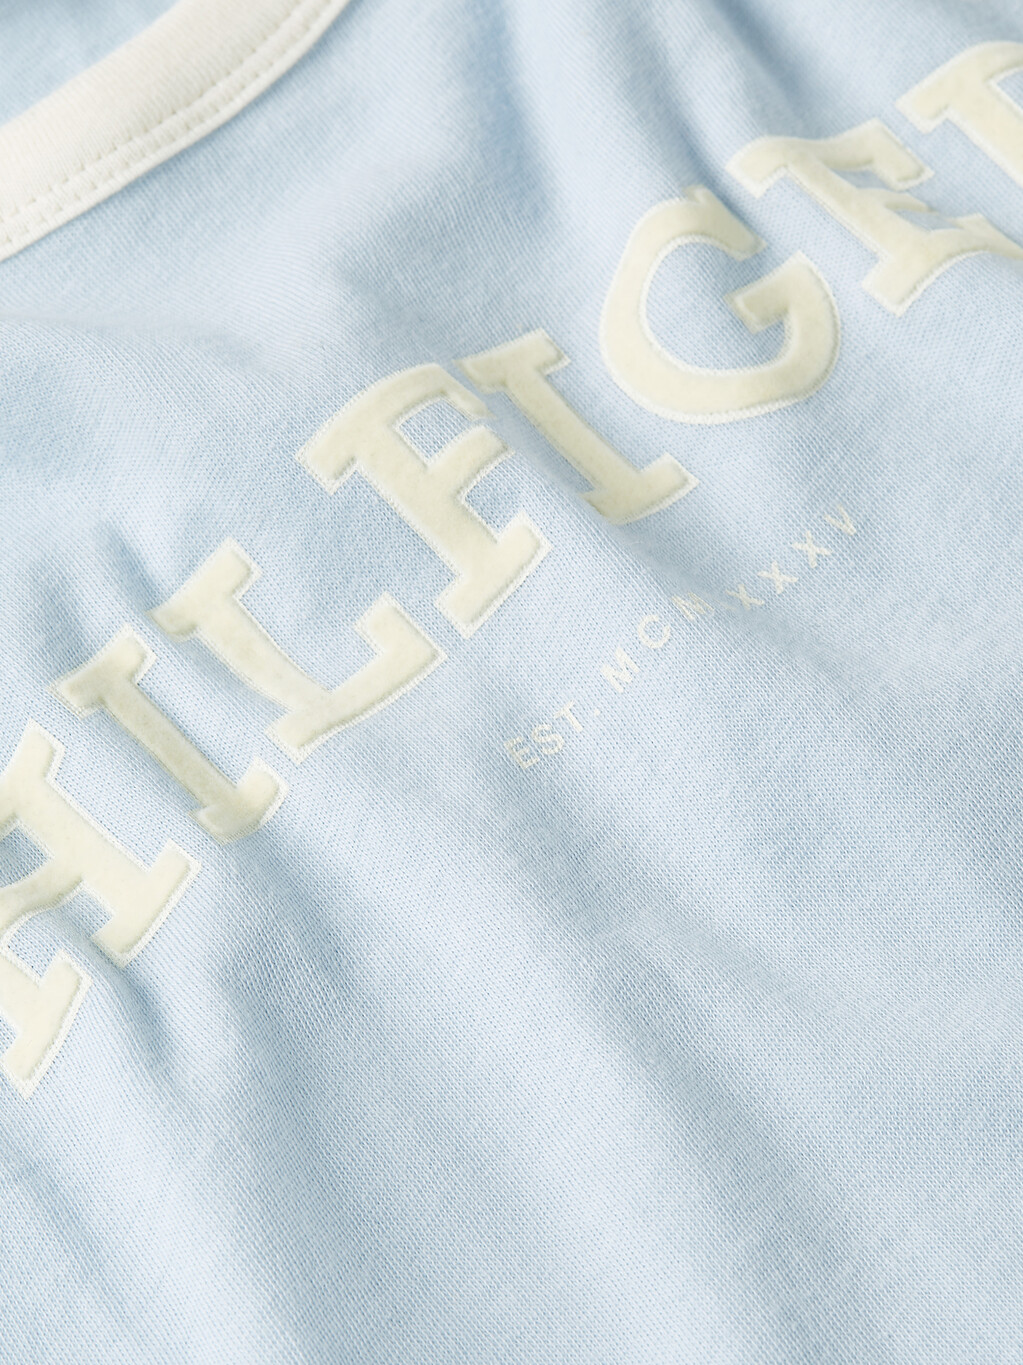 Hilfiger Monotype 植絨標誌 T 恤, Breezy Blue, hi-res